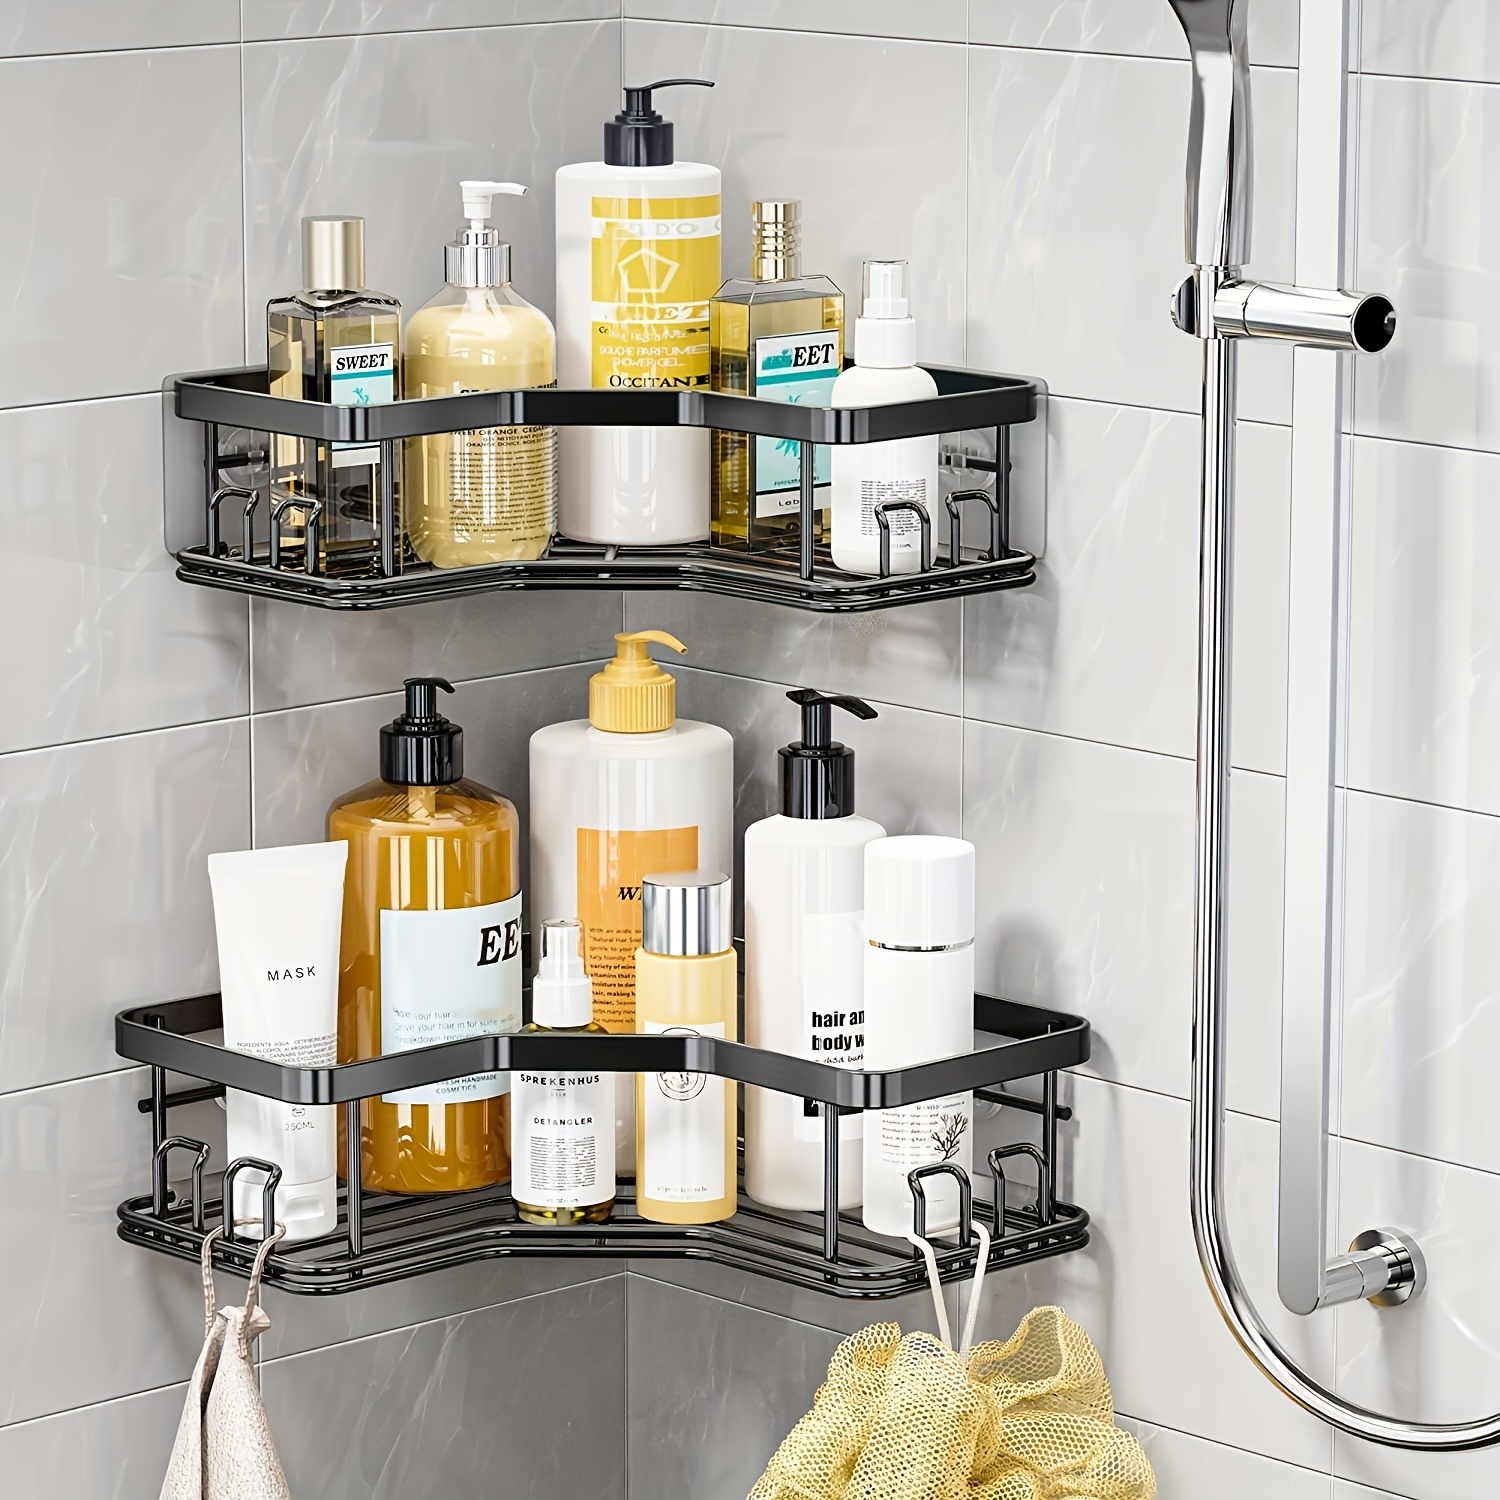 Gricol Bathroom Shower Caddy Adhesive Corner Shelf Review